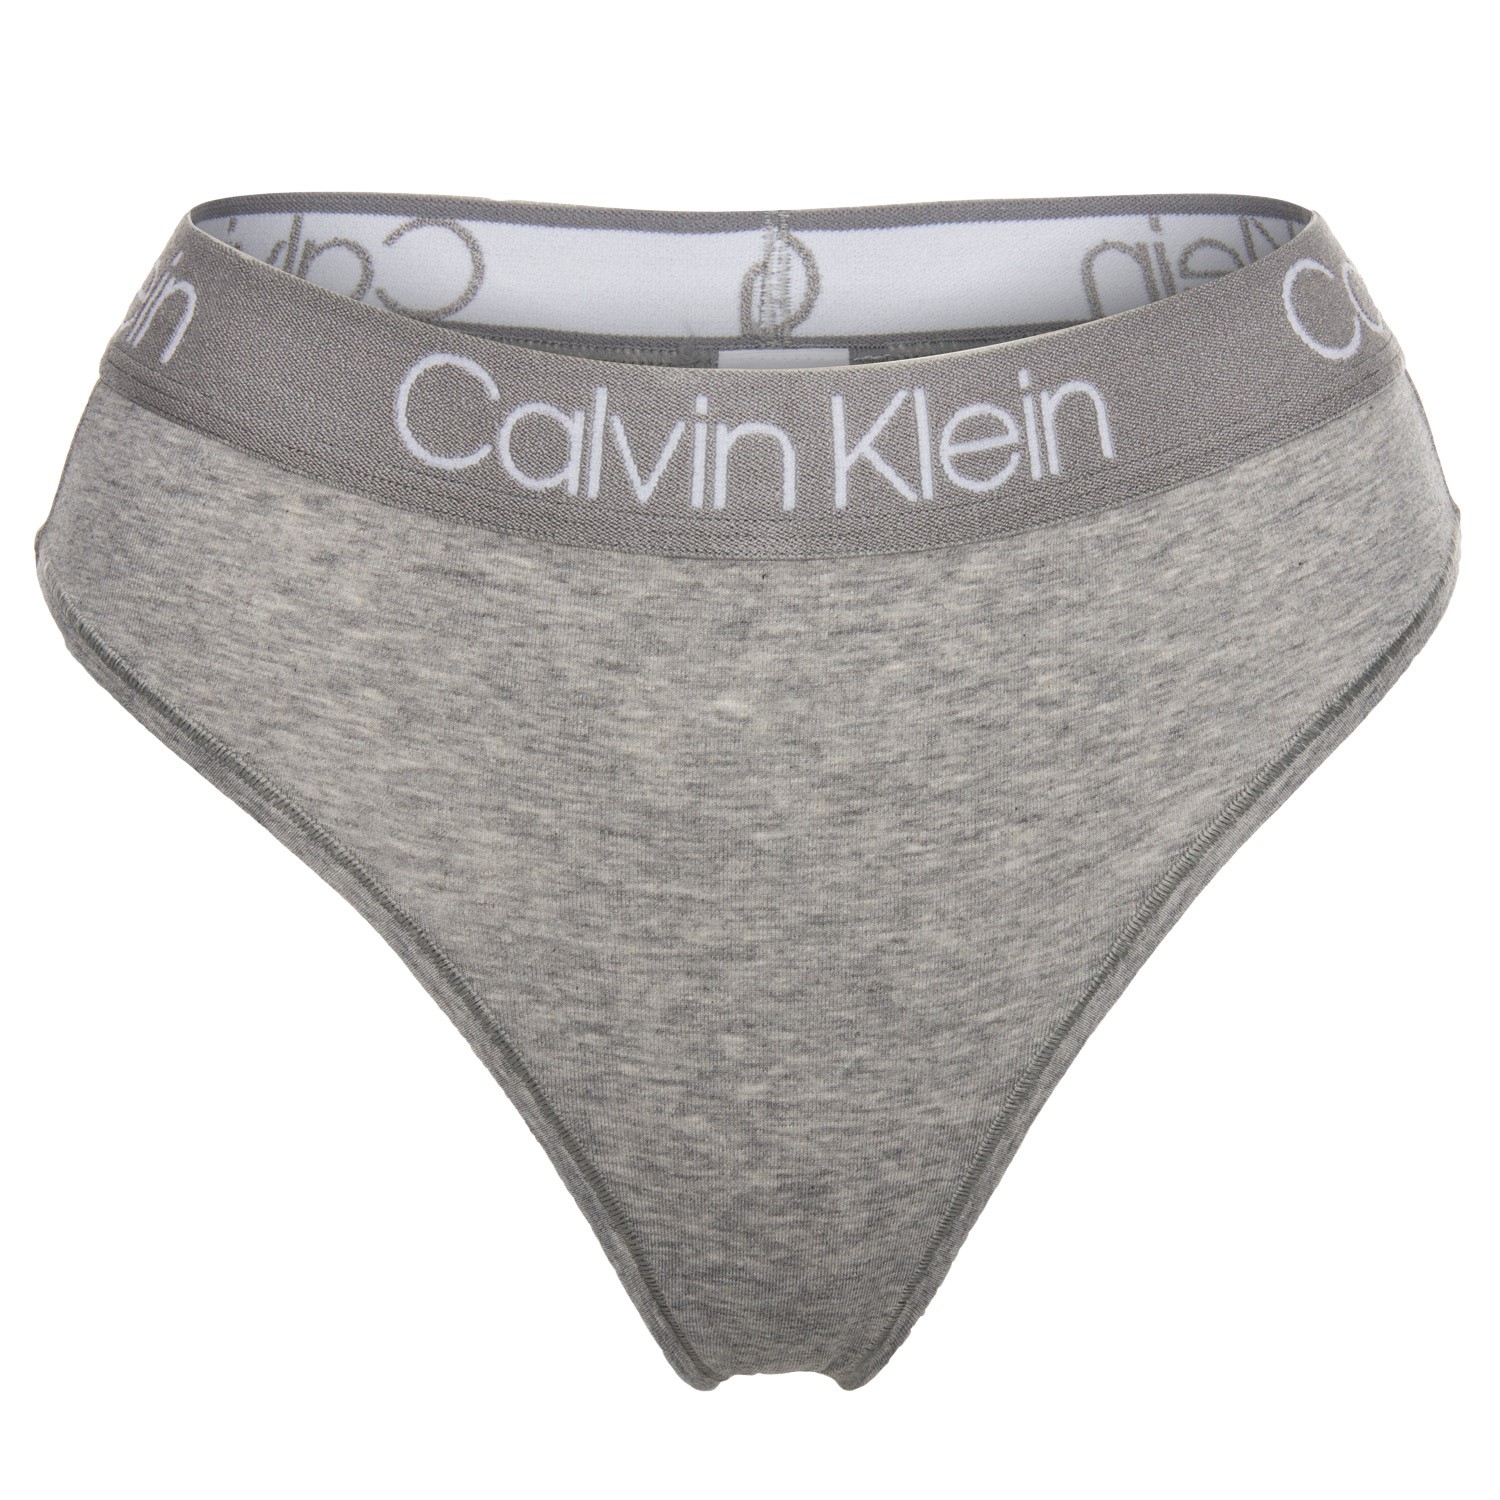 Calvin Klein Underwear BODY HIGH WAIST THONG - Thong - white